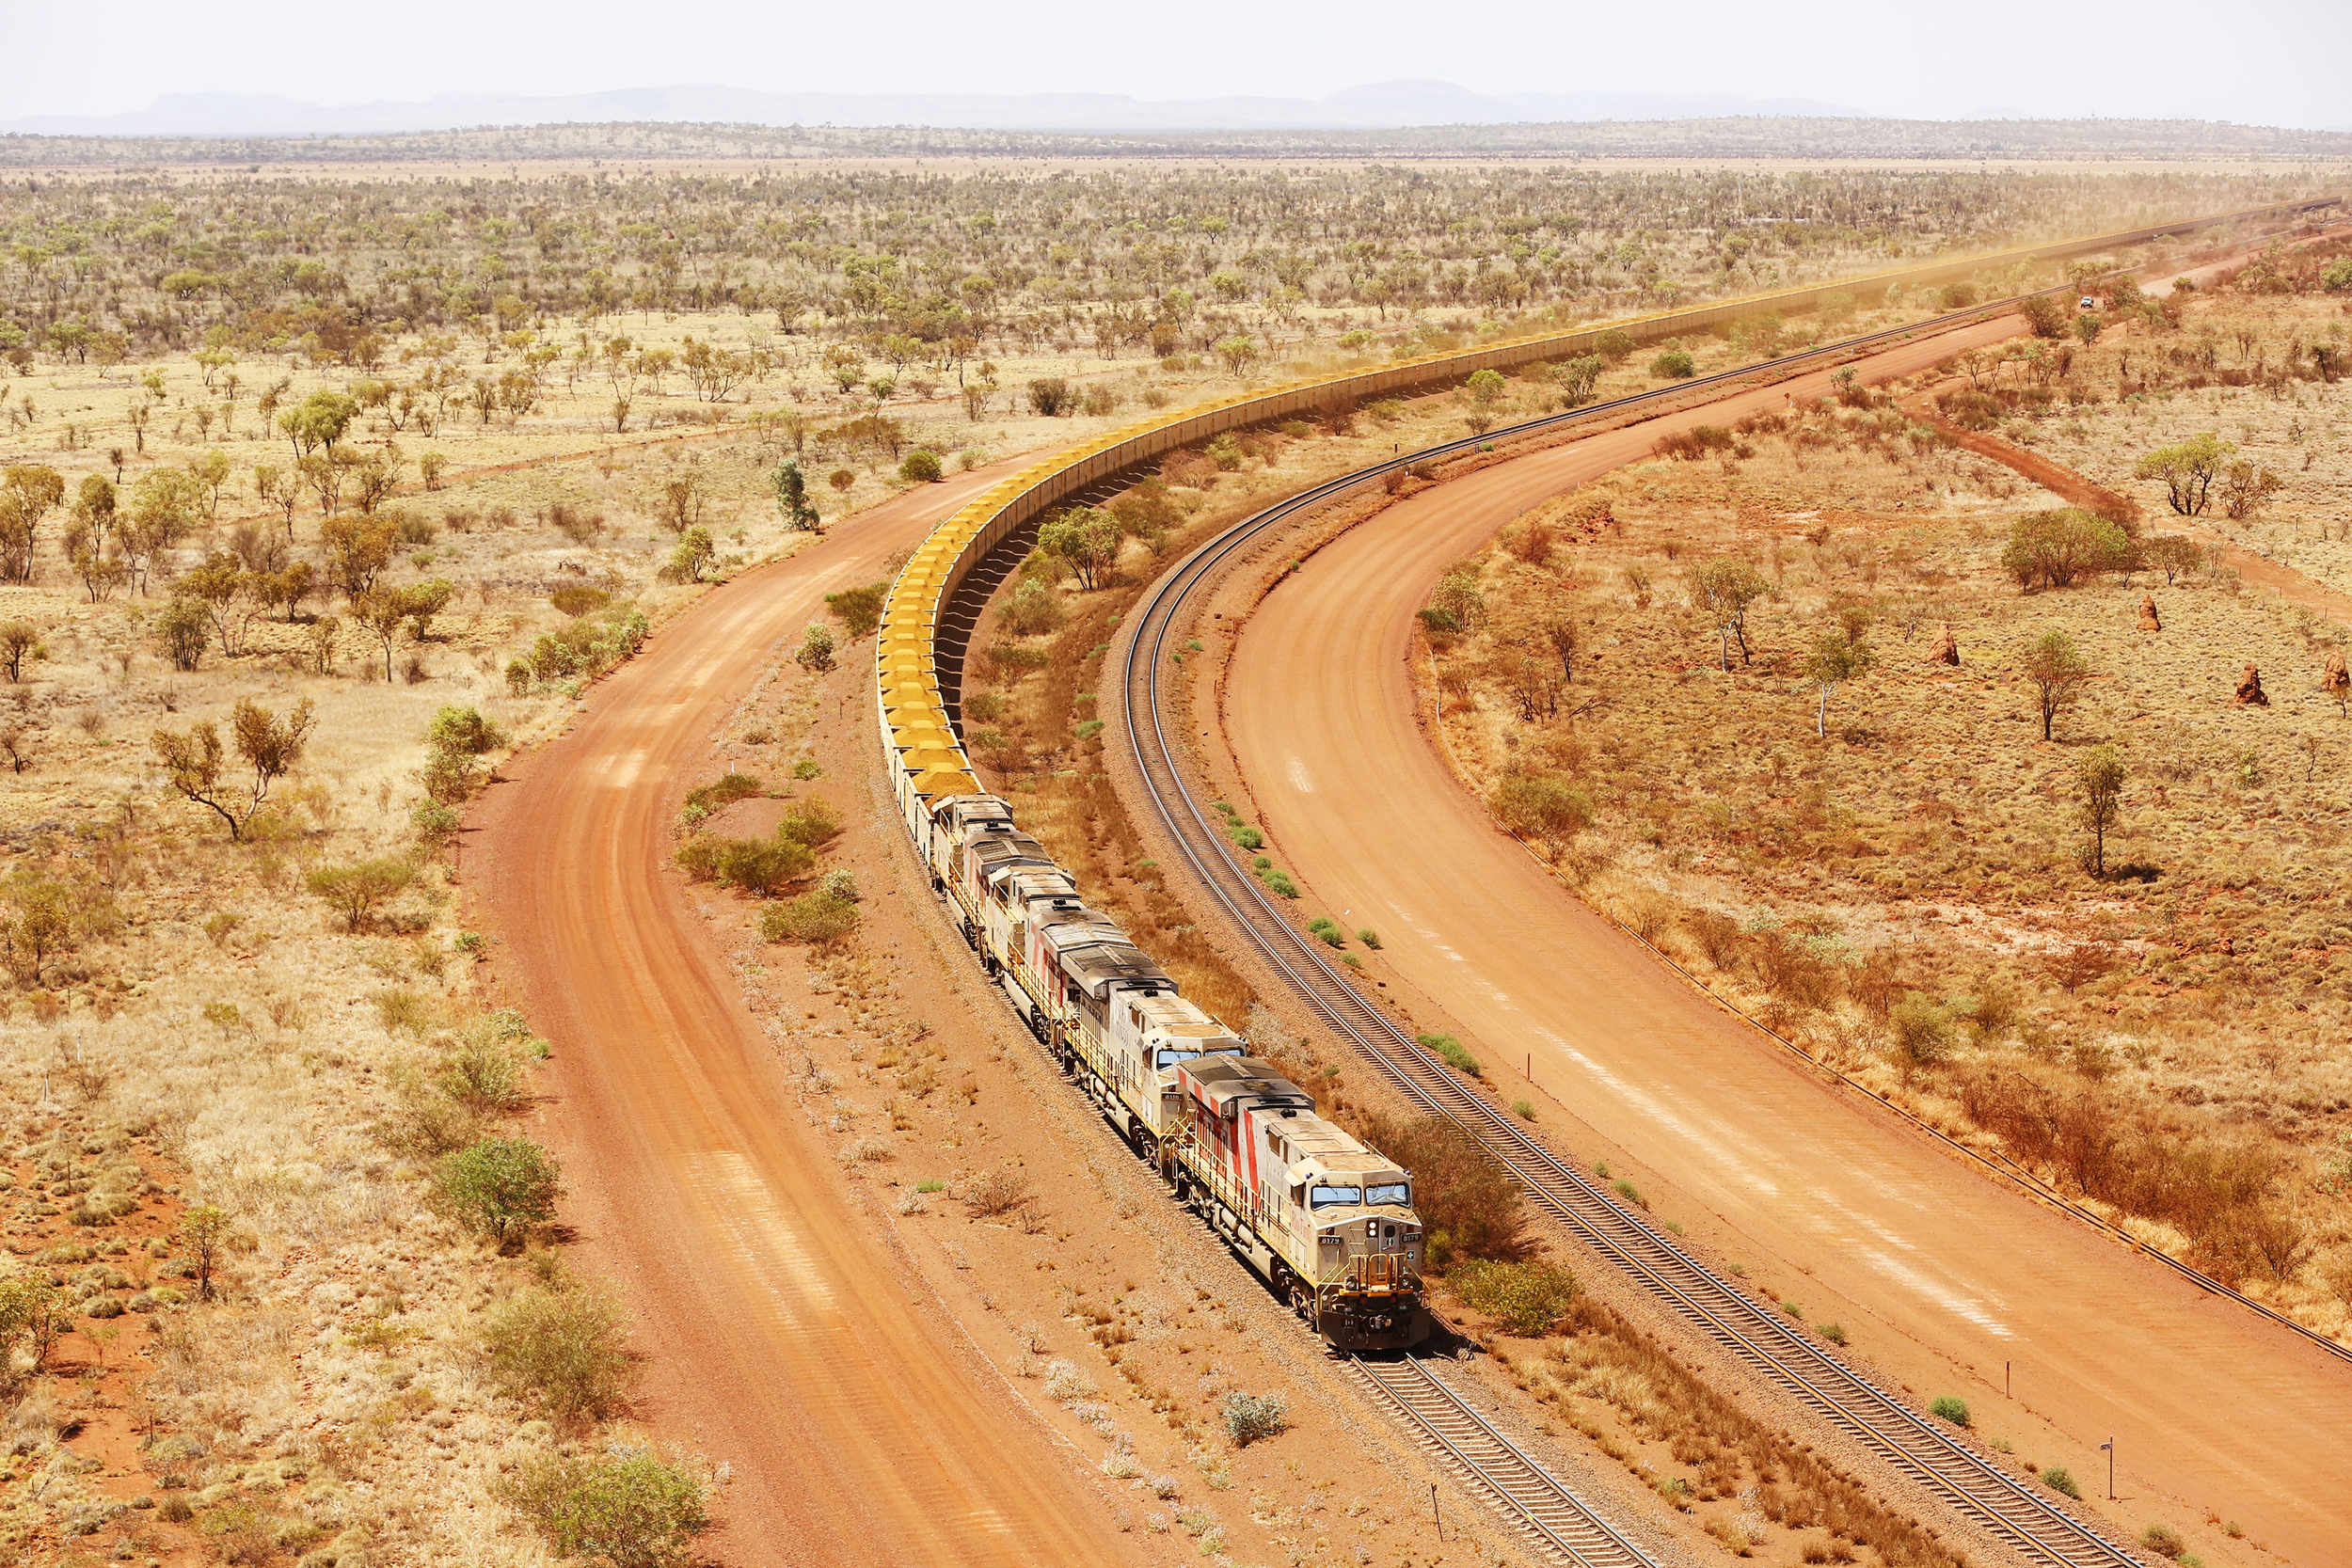  Iron Ore Train, Hamersley Station, Pilbara, Western Australia, 2016.&nbsp; Edition of 3. 